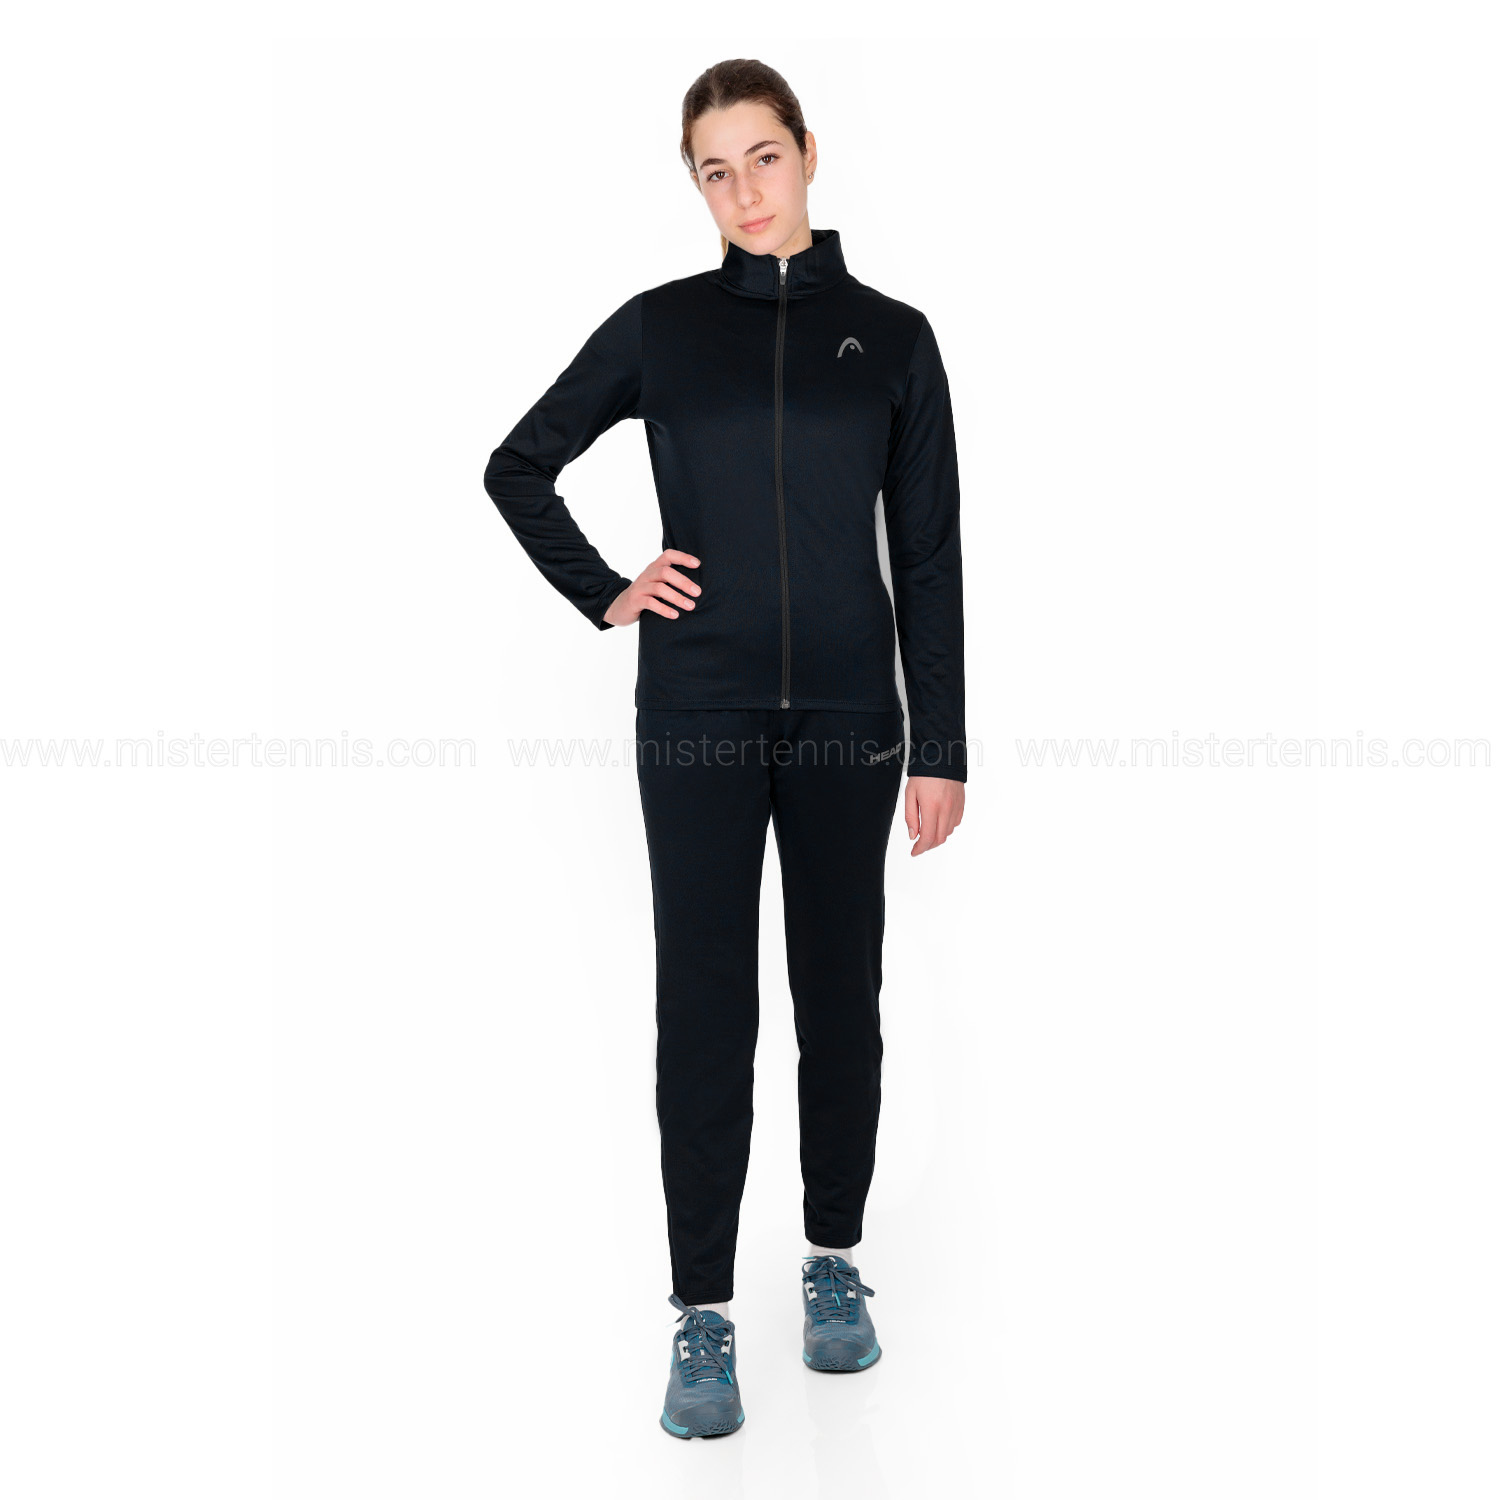 Head Easy Court Bodysuit - Black